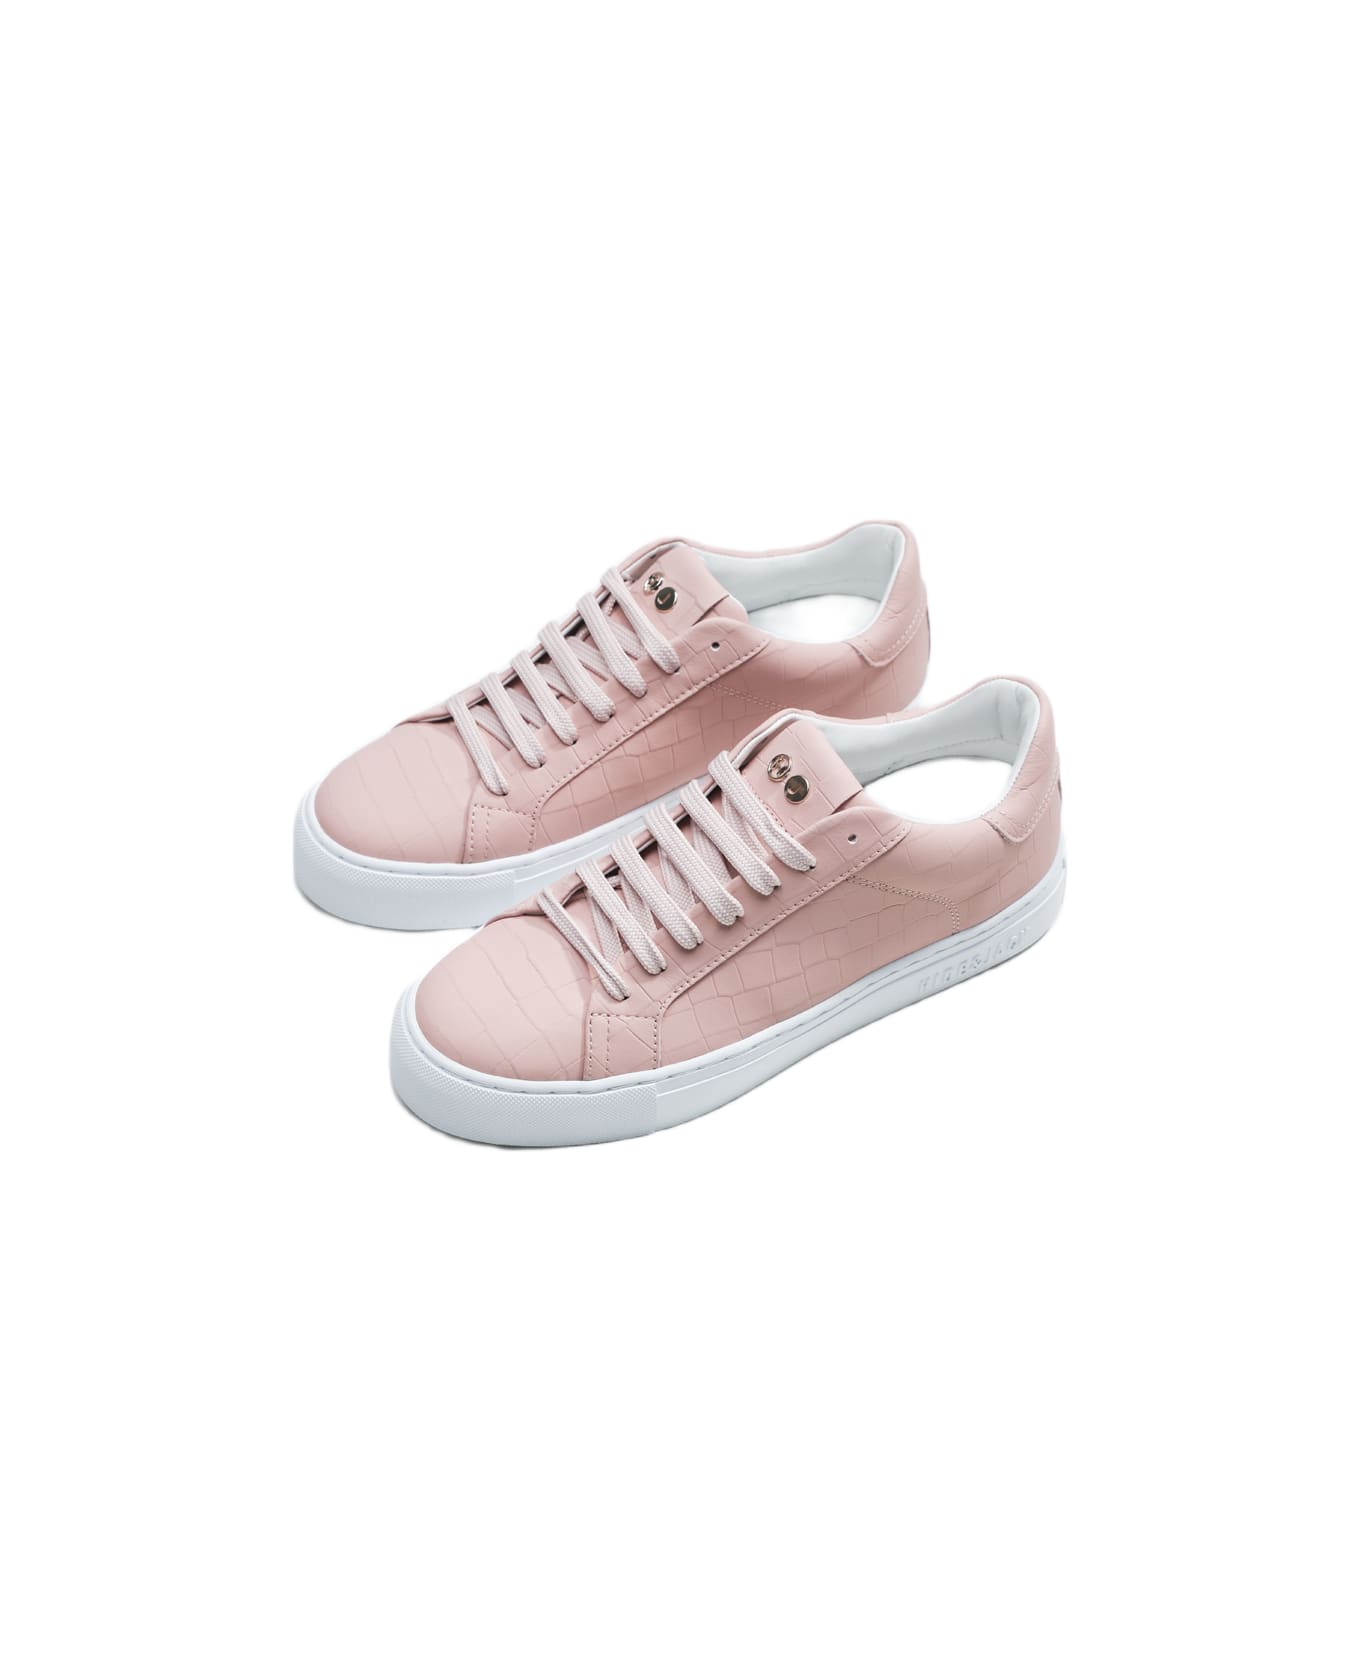 Hide&Jack Low Top Sneaker - Essence Pink White